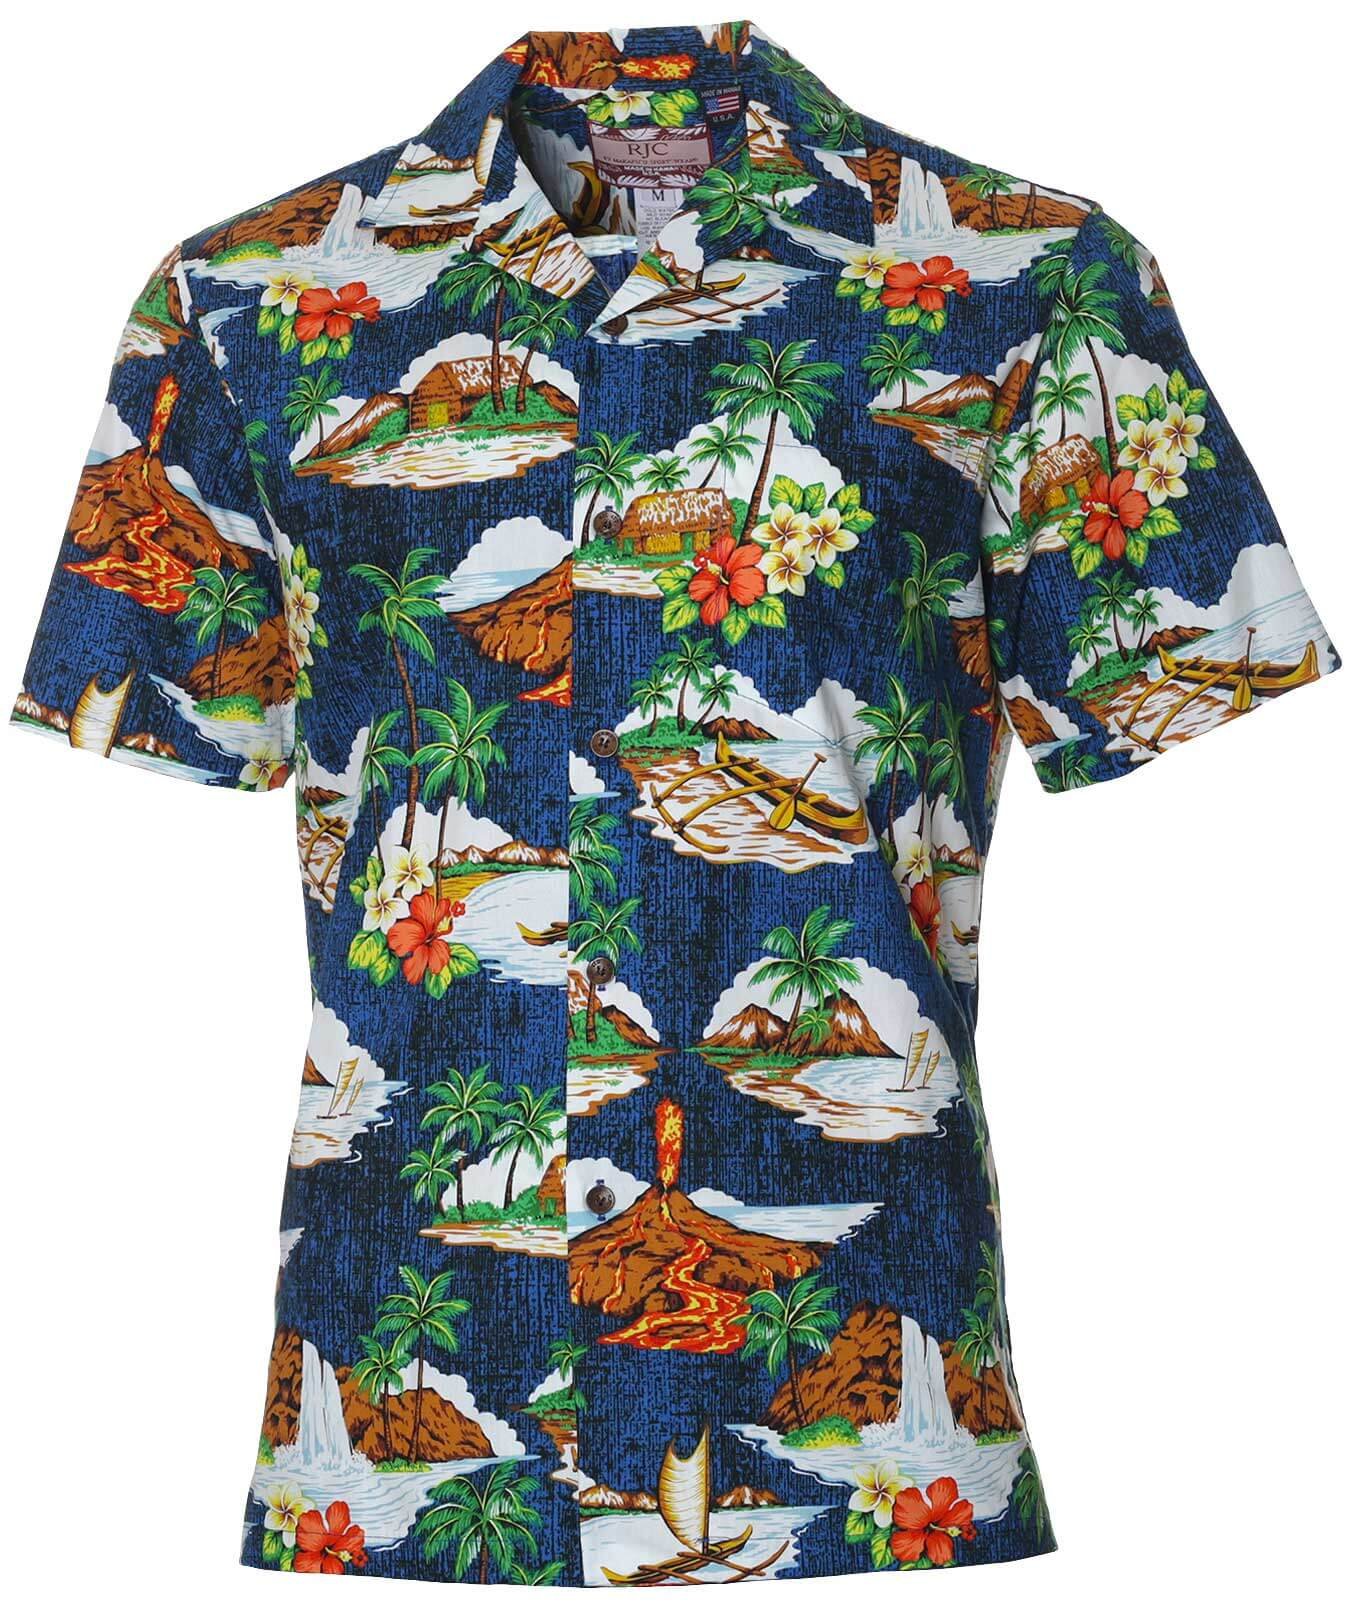 Big Island Cotton Men's Aloha Shirt Navy